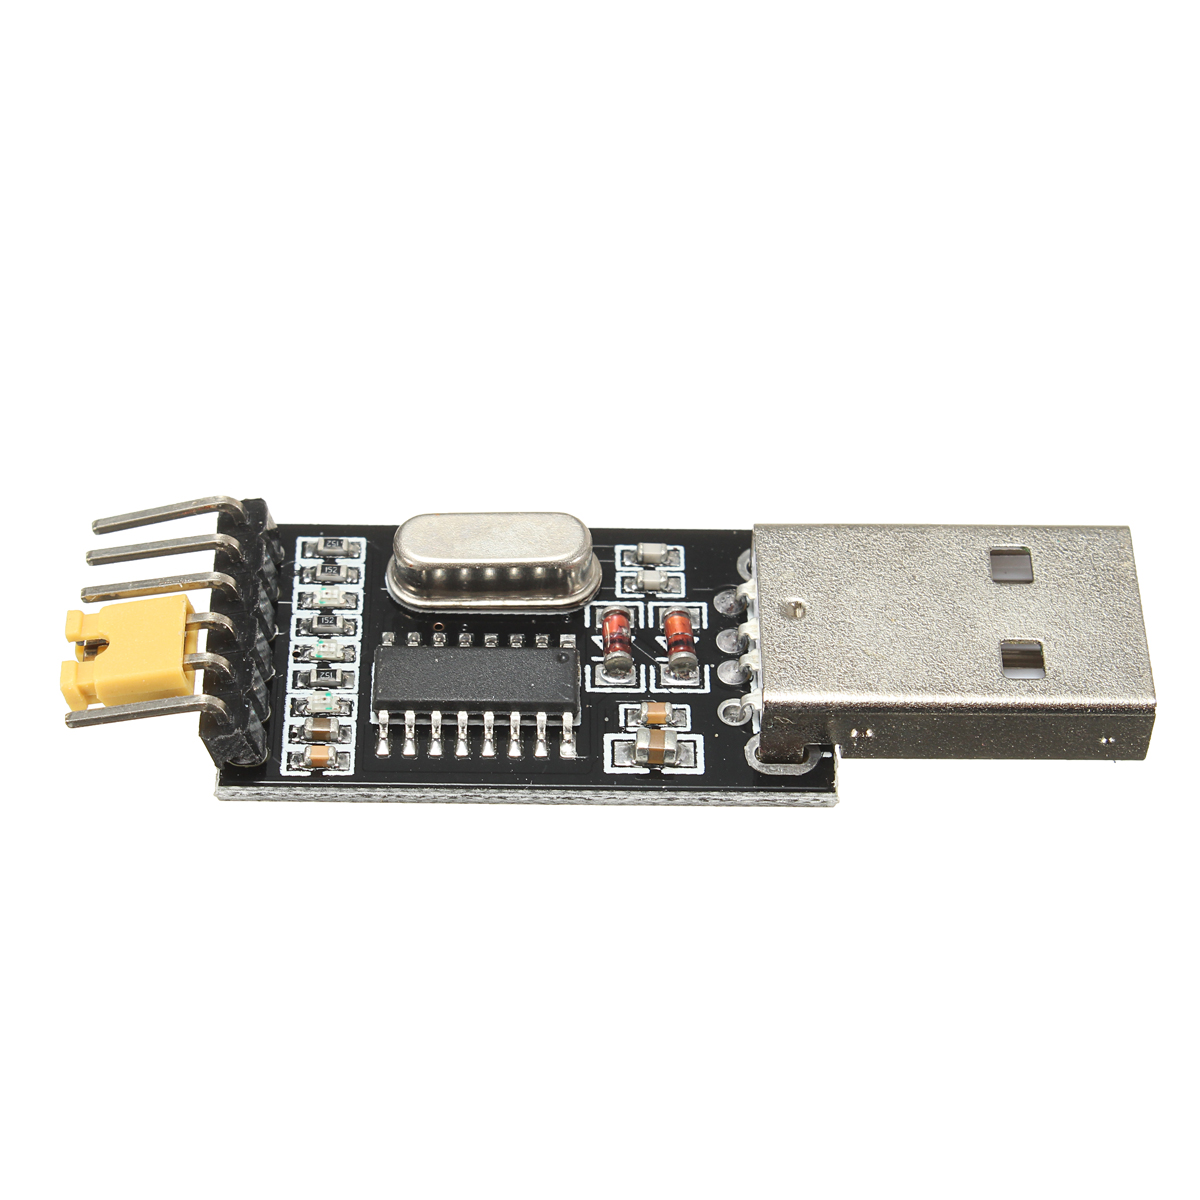 20pcs-33V-5V-USB-to-TTL-Converter-CH340G-UART-Serial-Adapter-Module-STC-1314968-5